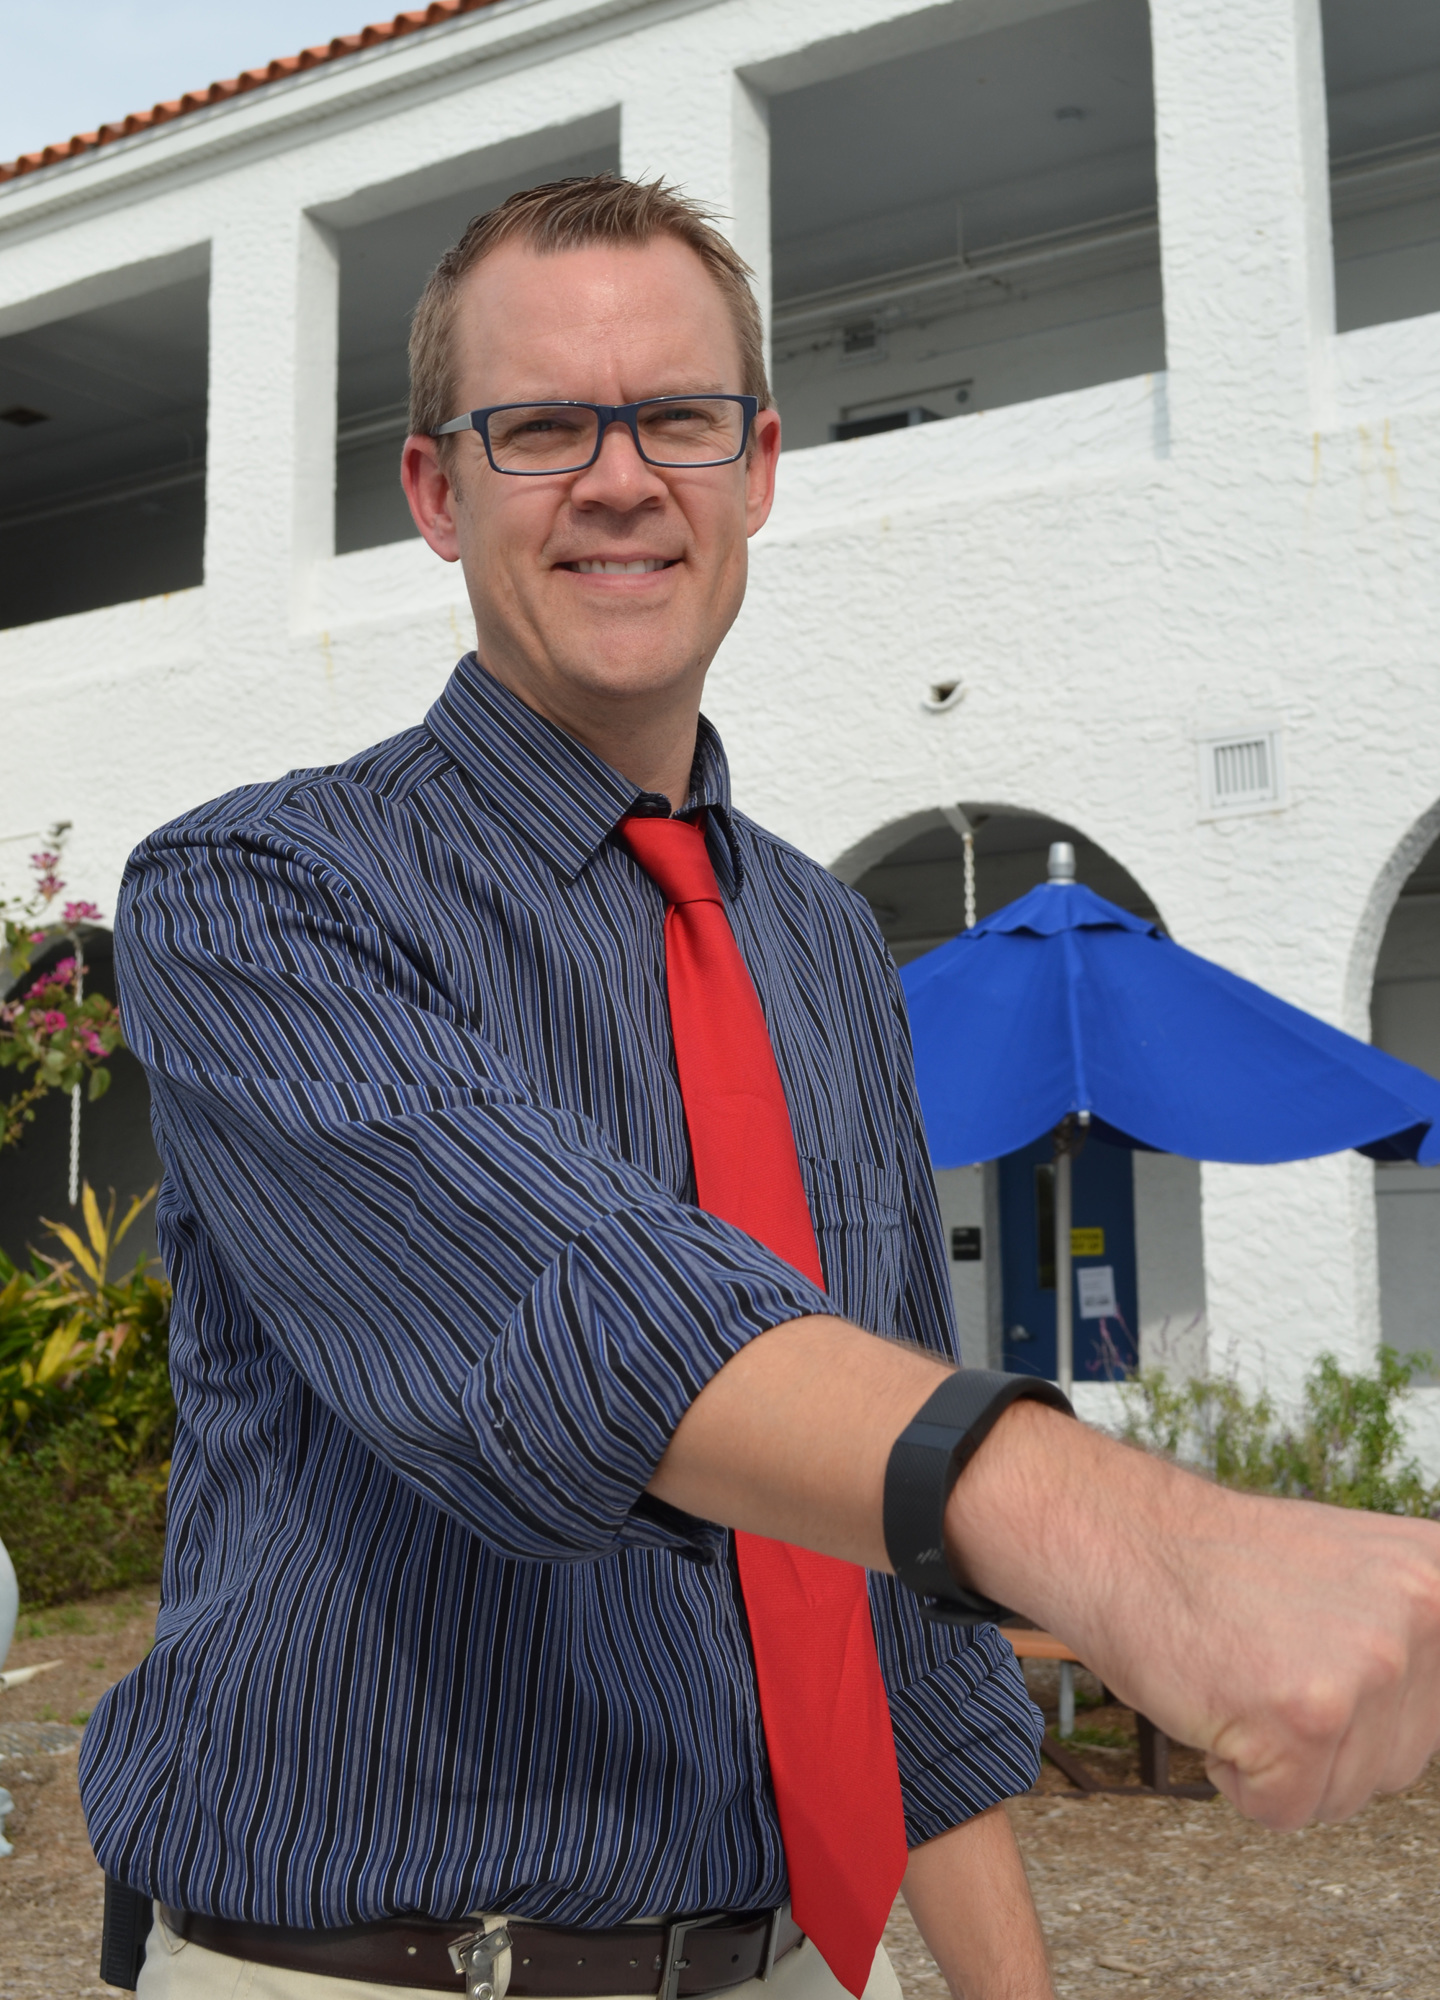 Bay Haven School of Basics Plus Principal Chad Erickson with his Fitbit bracelet.